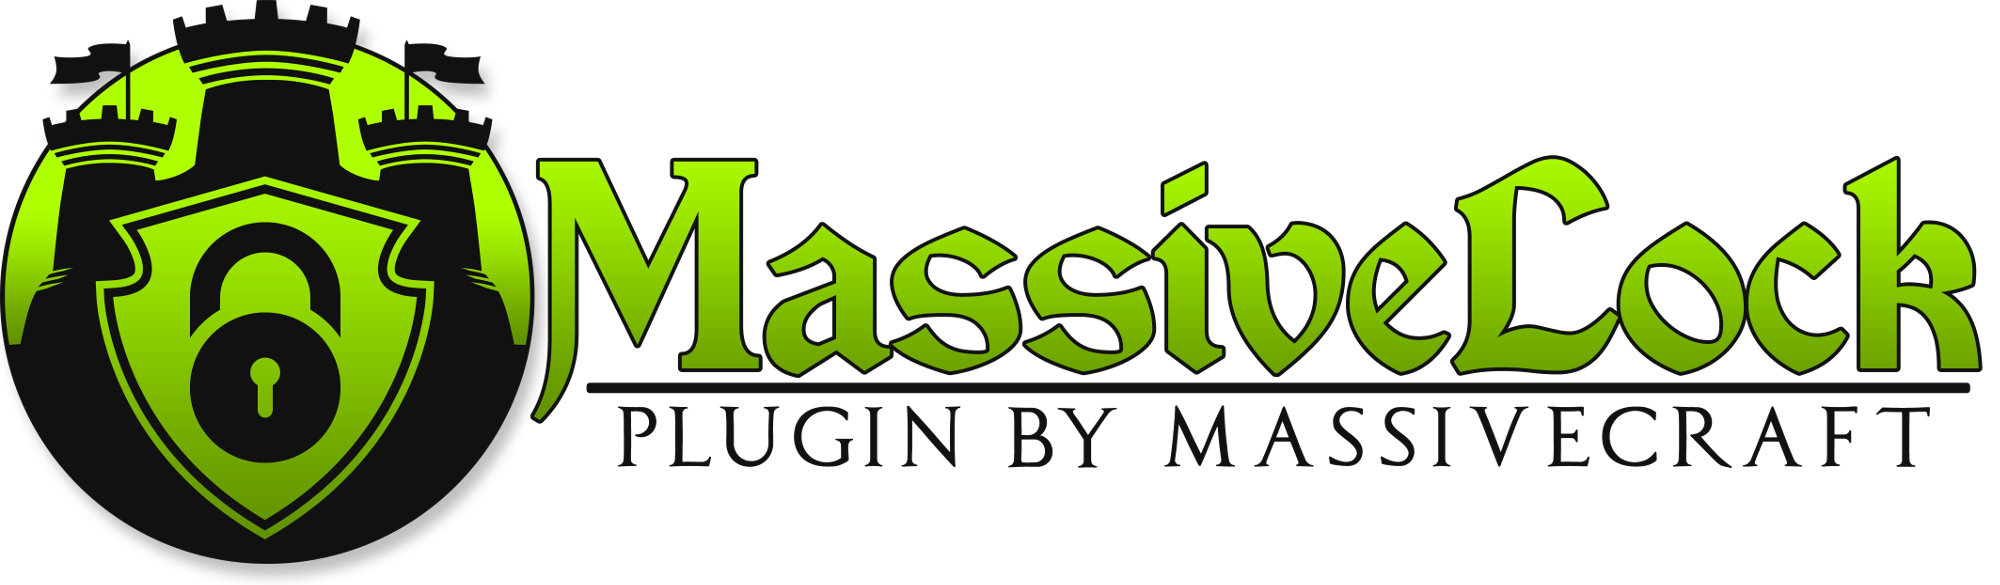 massivecraft-logotype-plugin-massivelock-2000.jpg